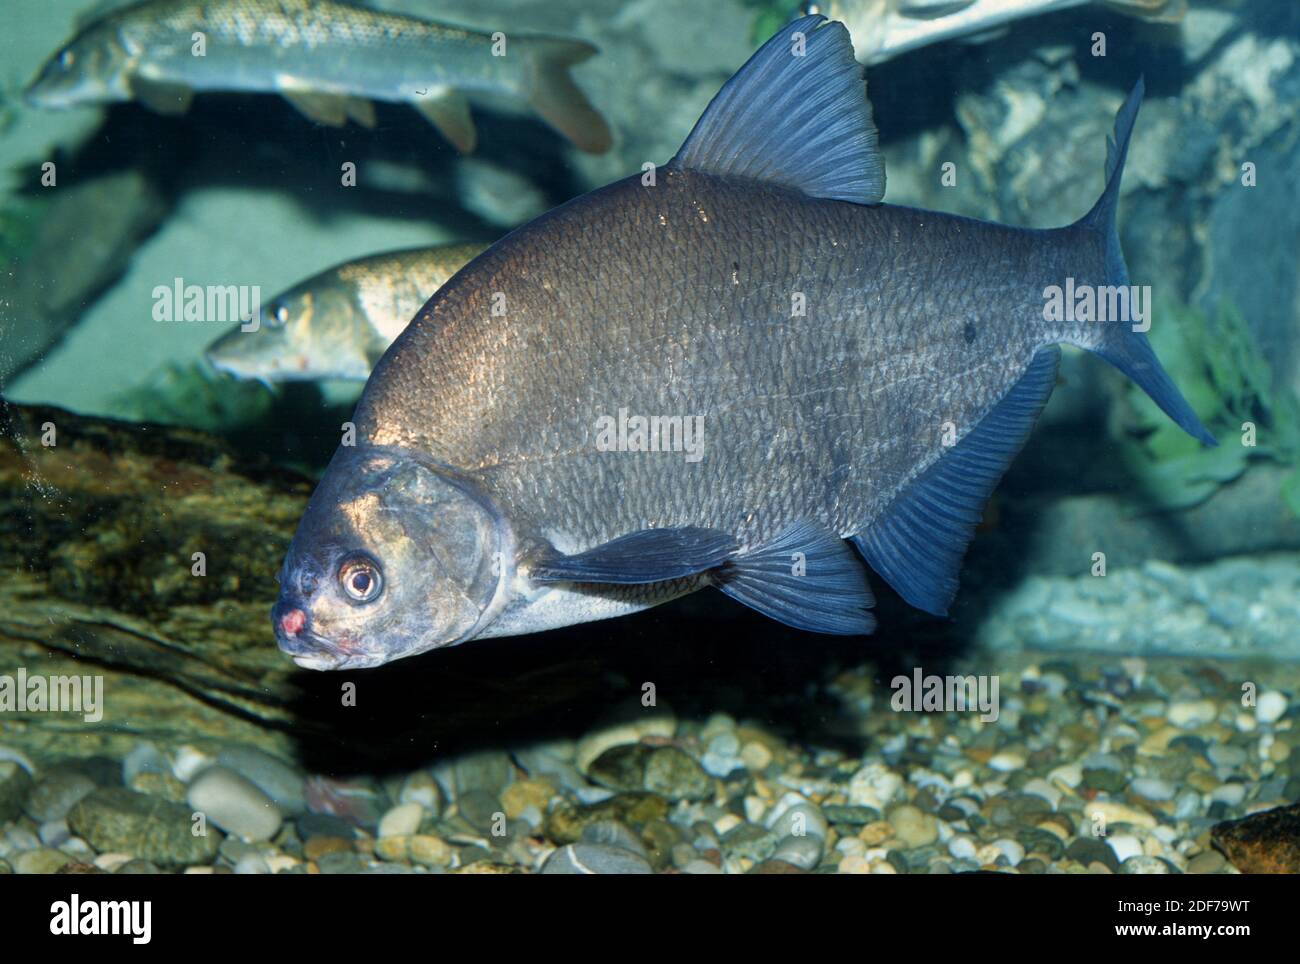 White-eye bream (Abramis sapa or Ballerus sapa) is a freshwater fish native to eastern Europe and central Asia rivers. Stock Photo